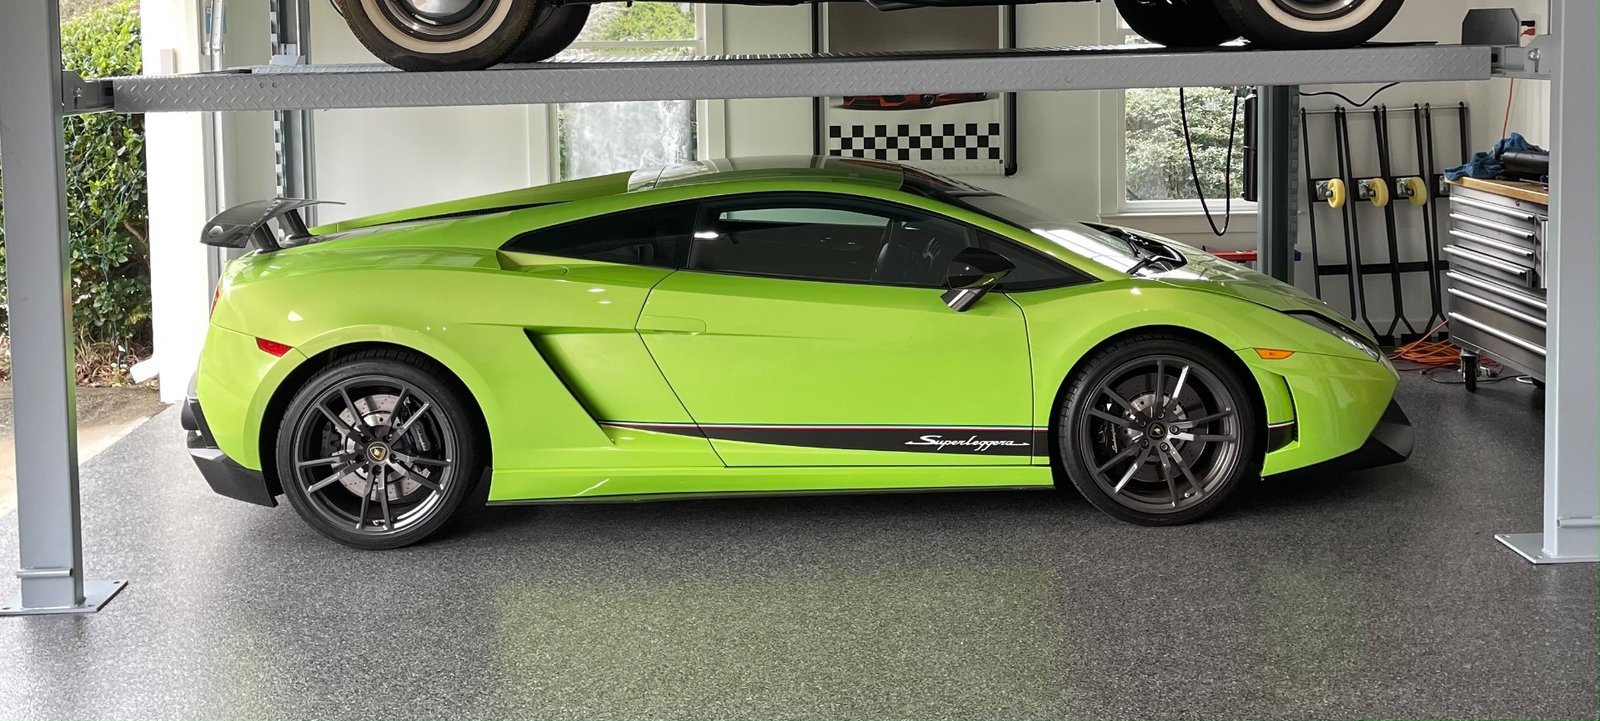 Used 2012 Lamborghini Gallardo For Sale (14)